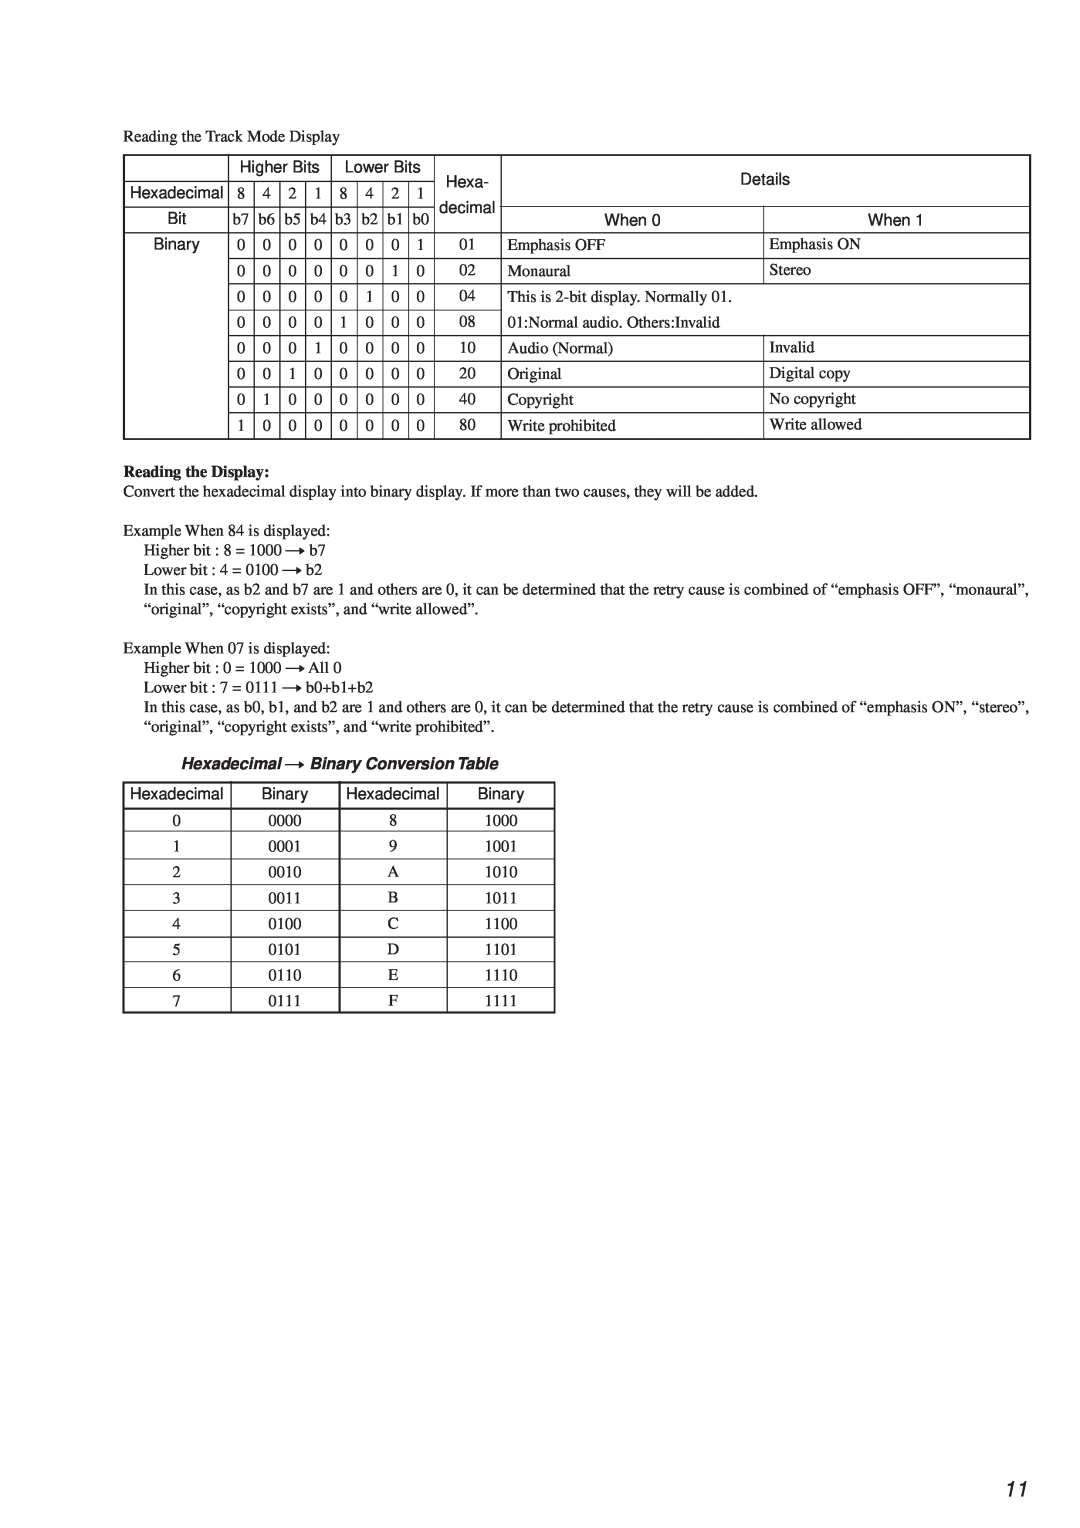 Sony MDS-PC2 service manual Reading the Display, Hexadecimal nBinary Conversion Table 